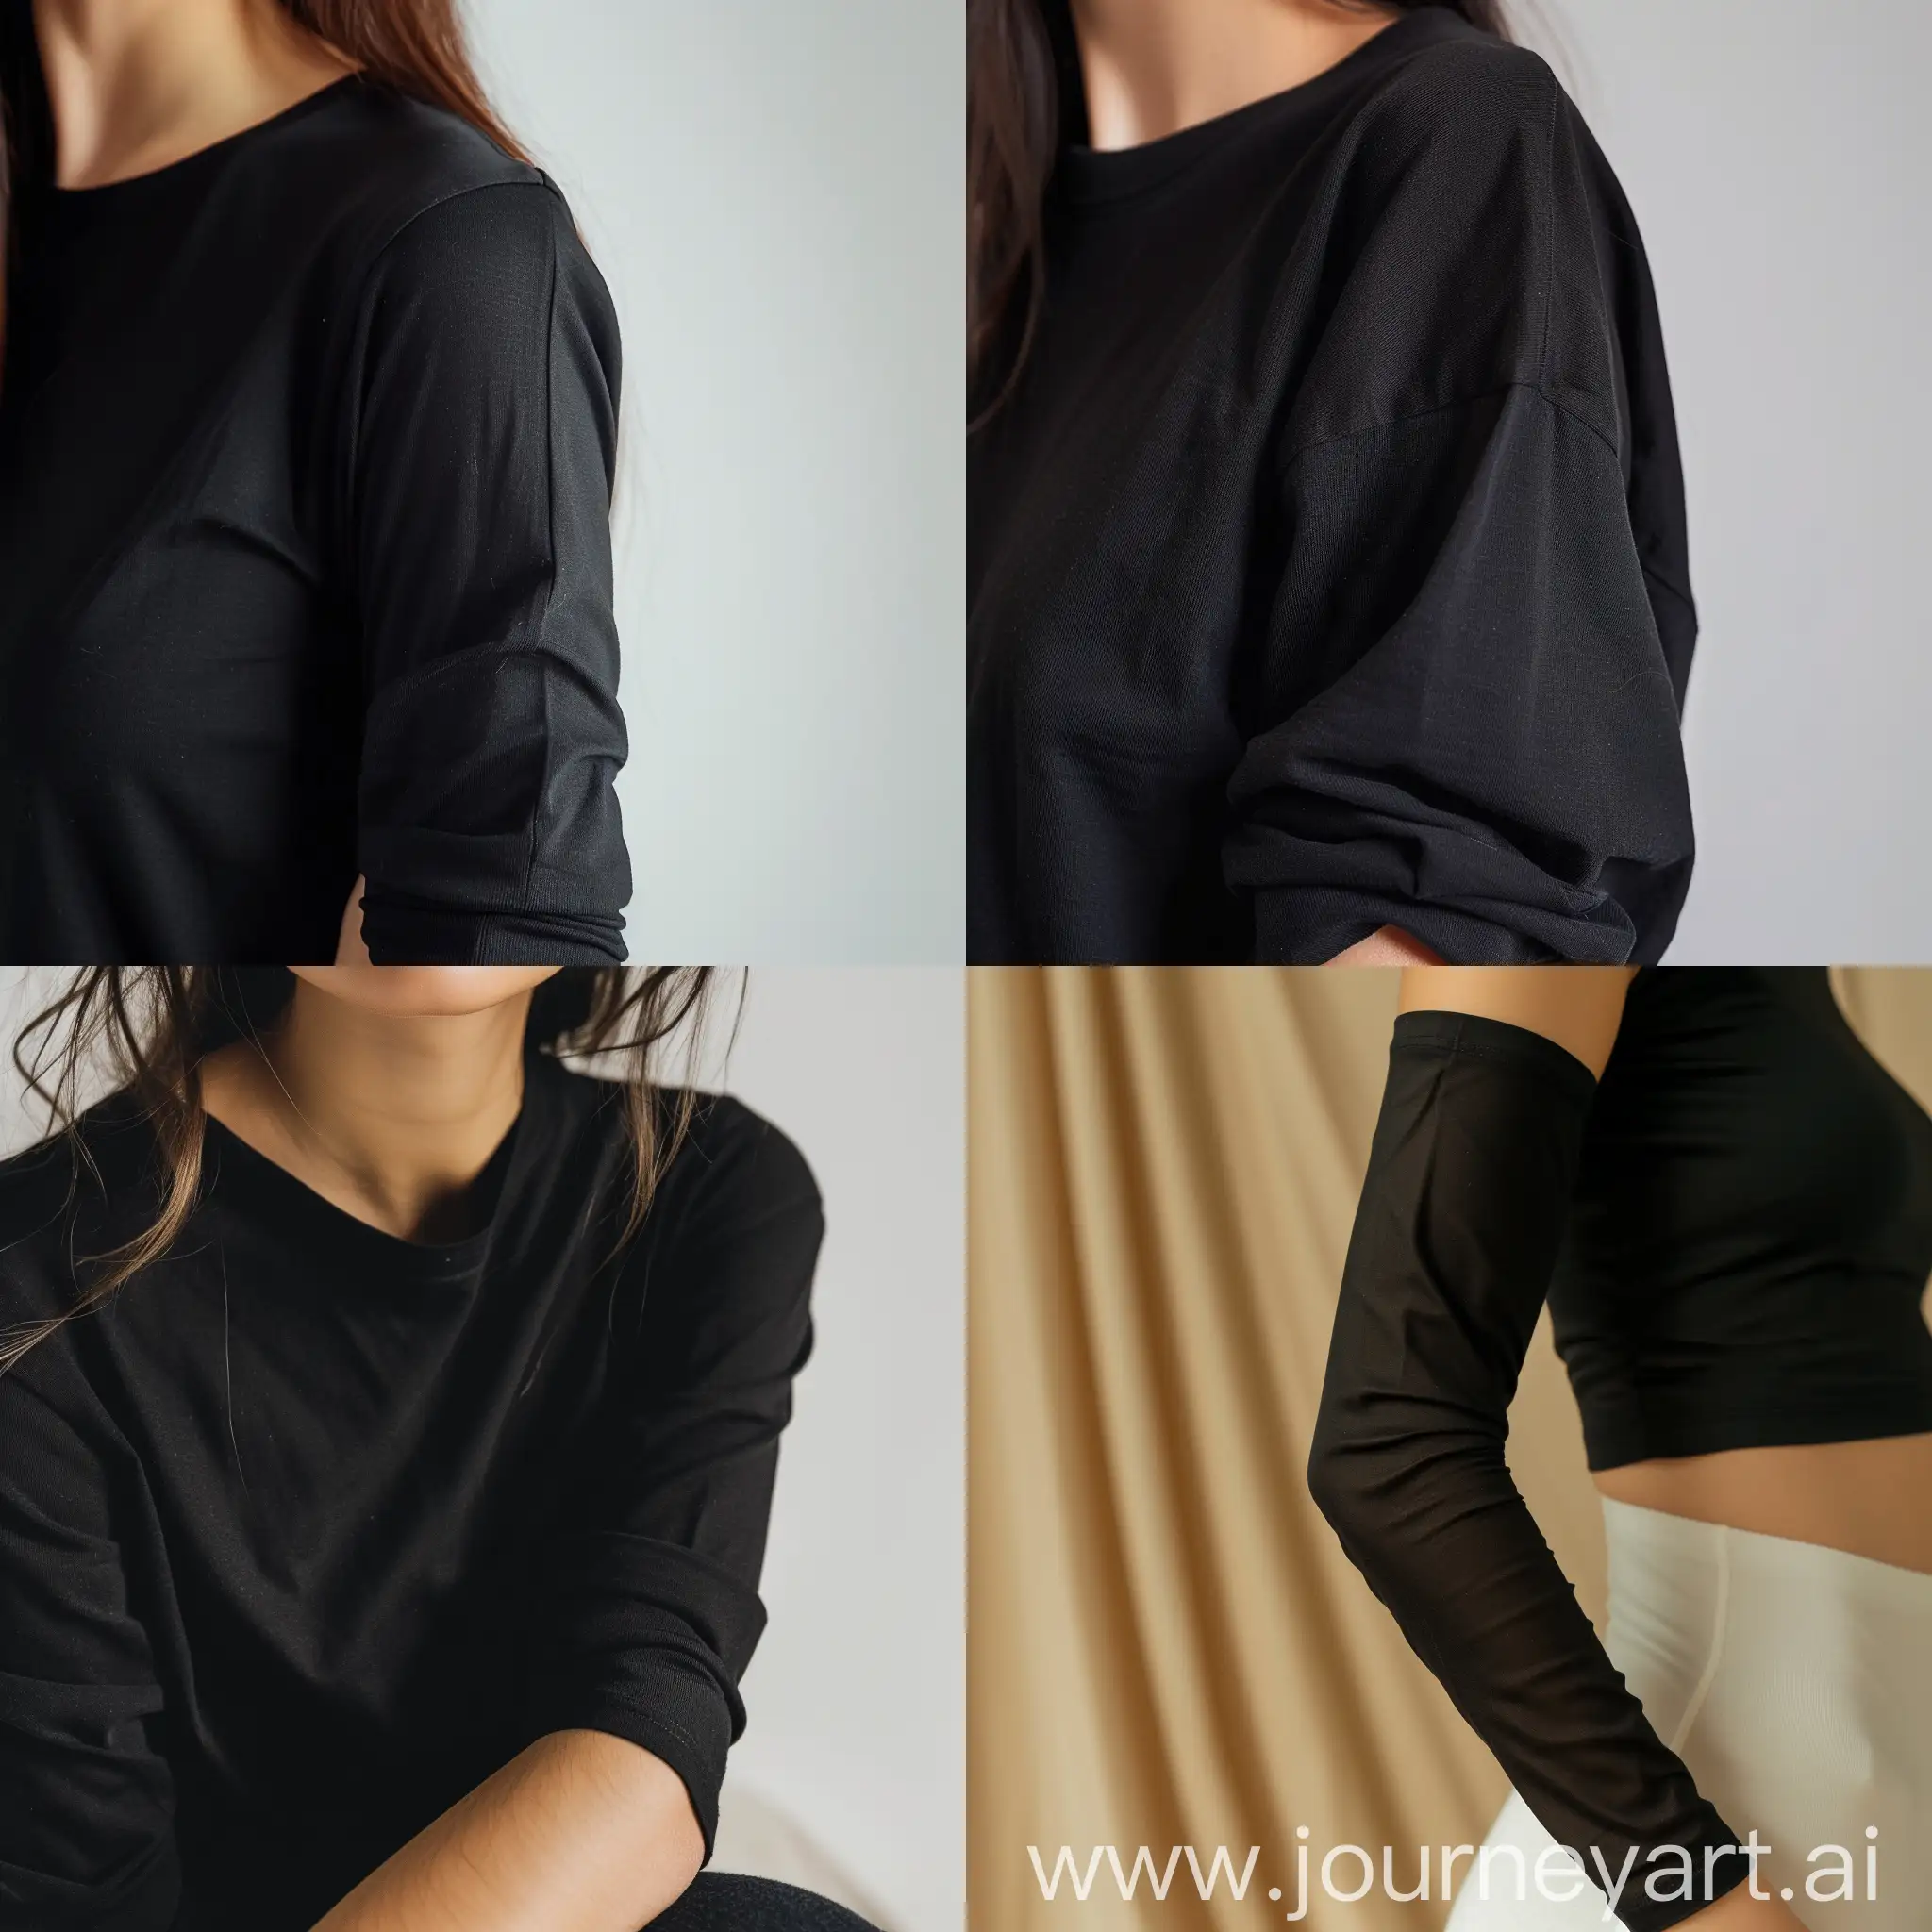 Elegant-Black-Sleeve-Detail-Photography-for-Fashion-Enthusiasts